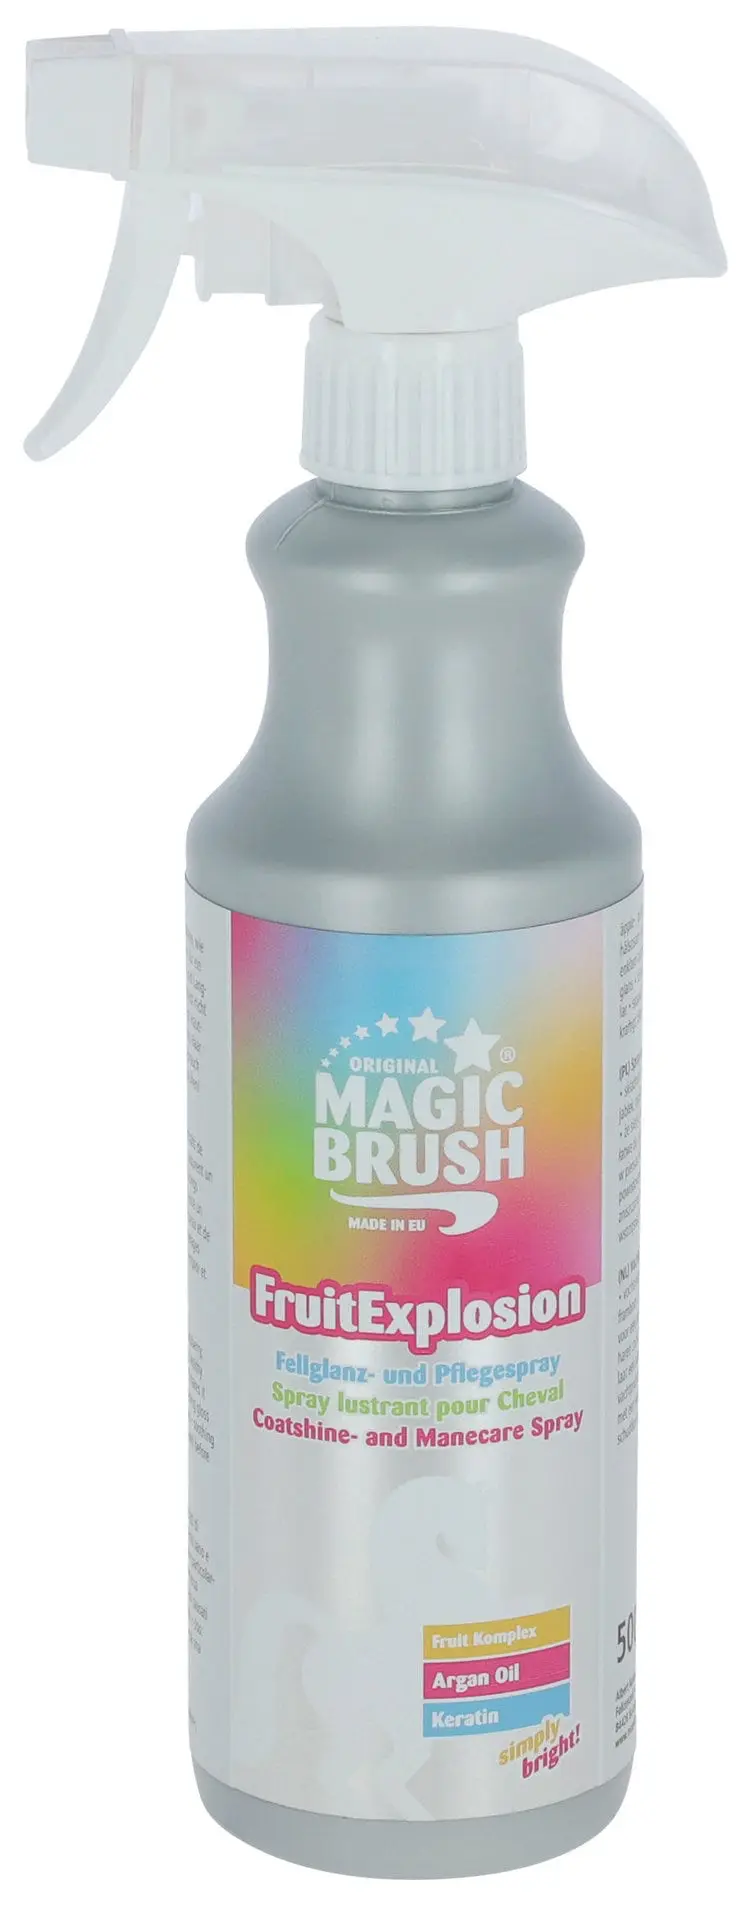 MagicBrush hajfényező spray ManeCare FruitExplosion 500 ml